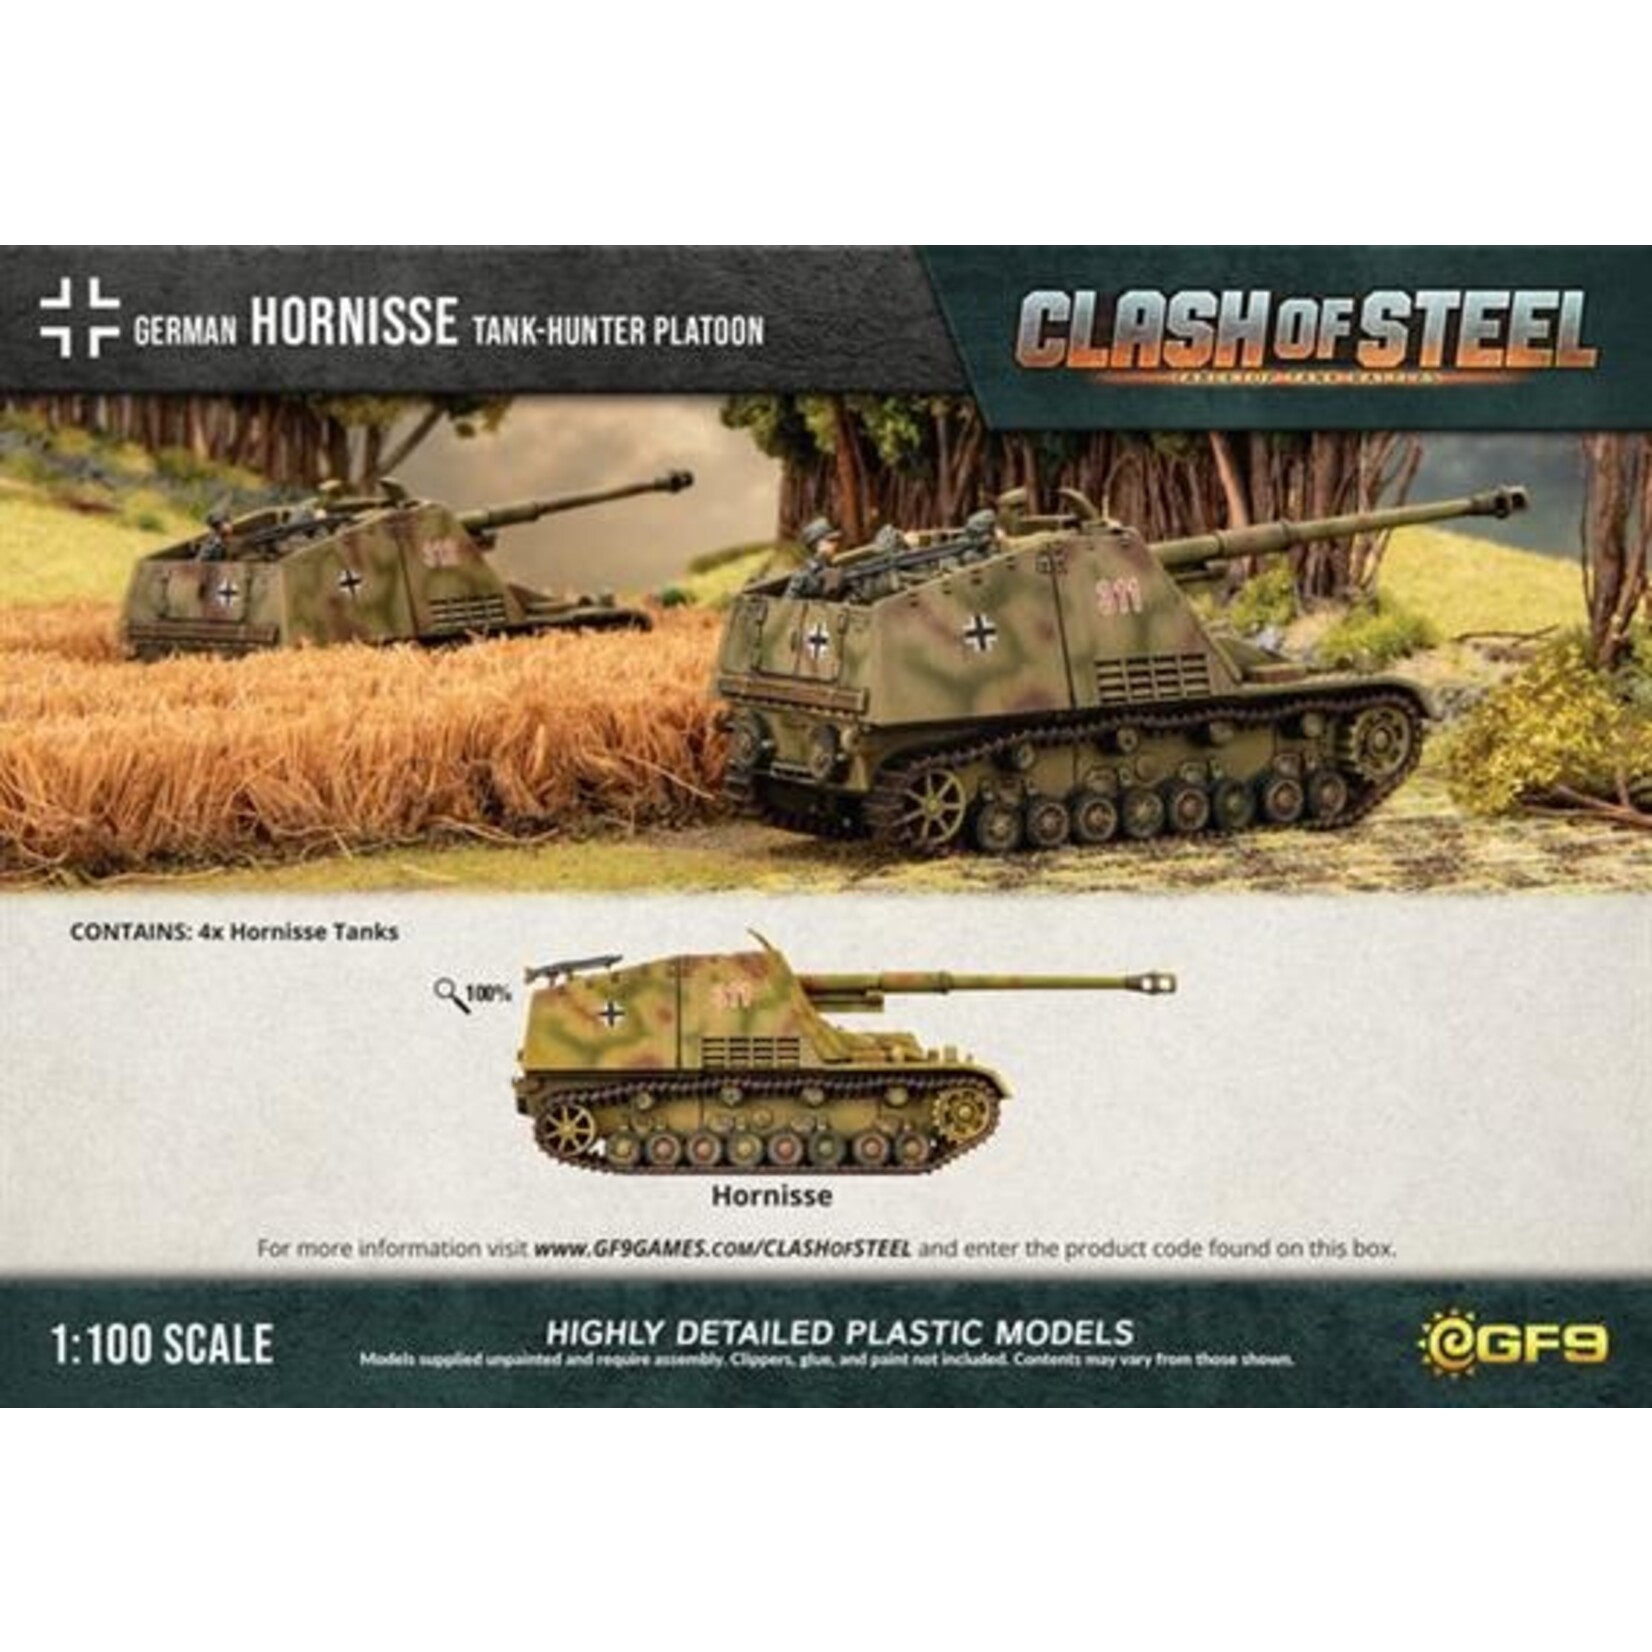 Clash Of Steel German Hornisse Tank-Hunter Platoon